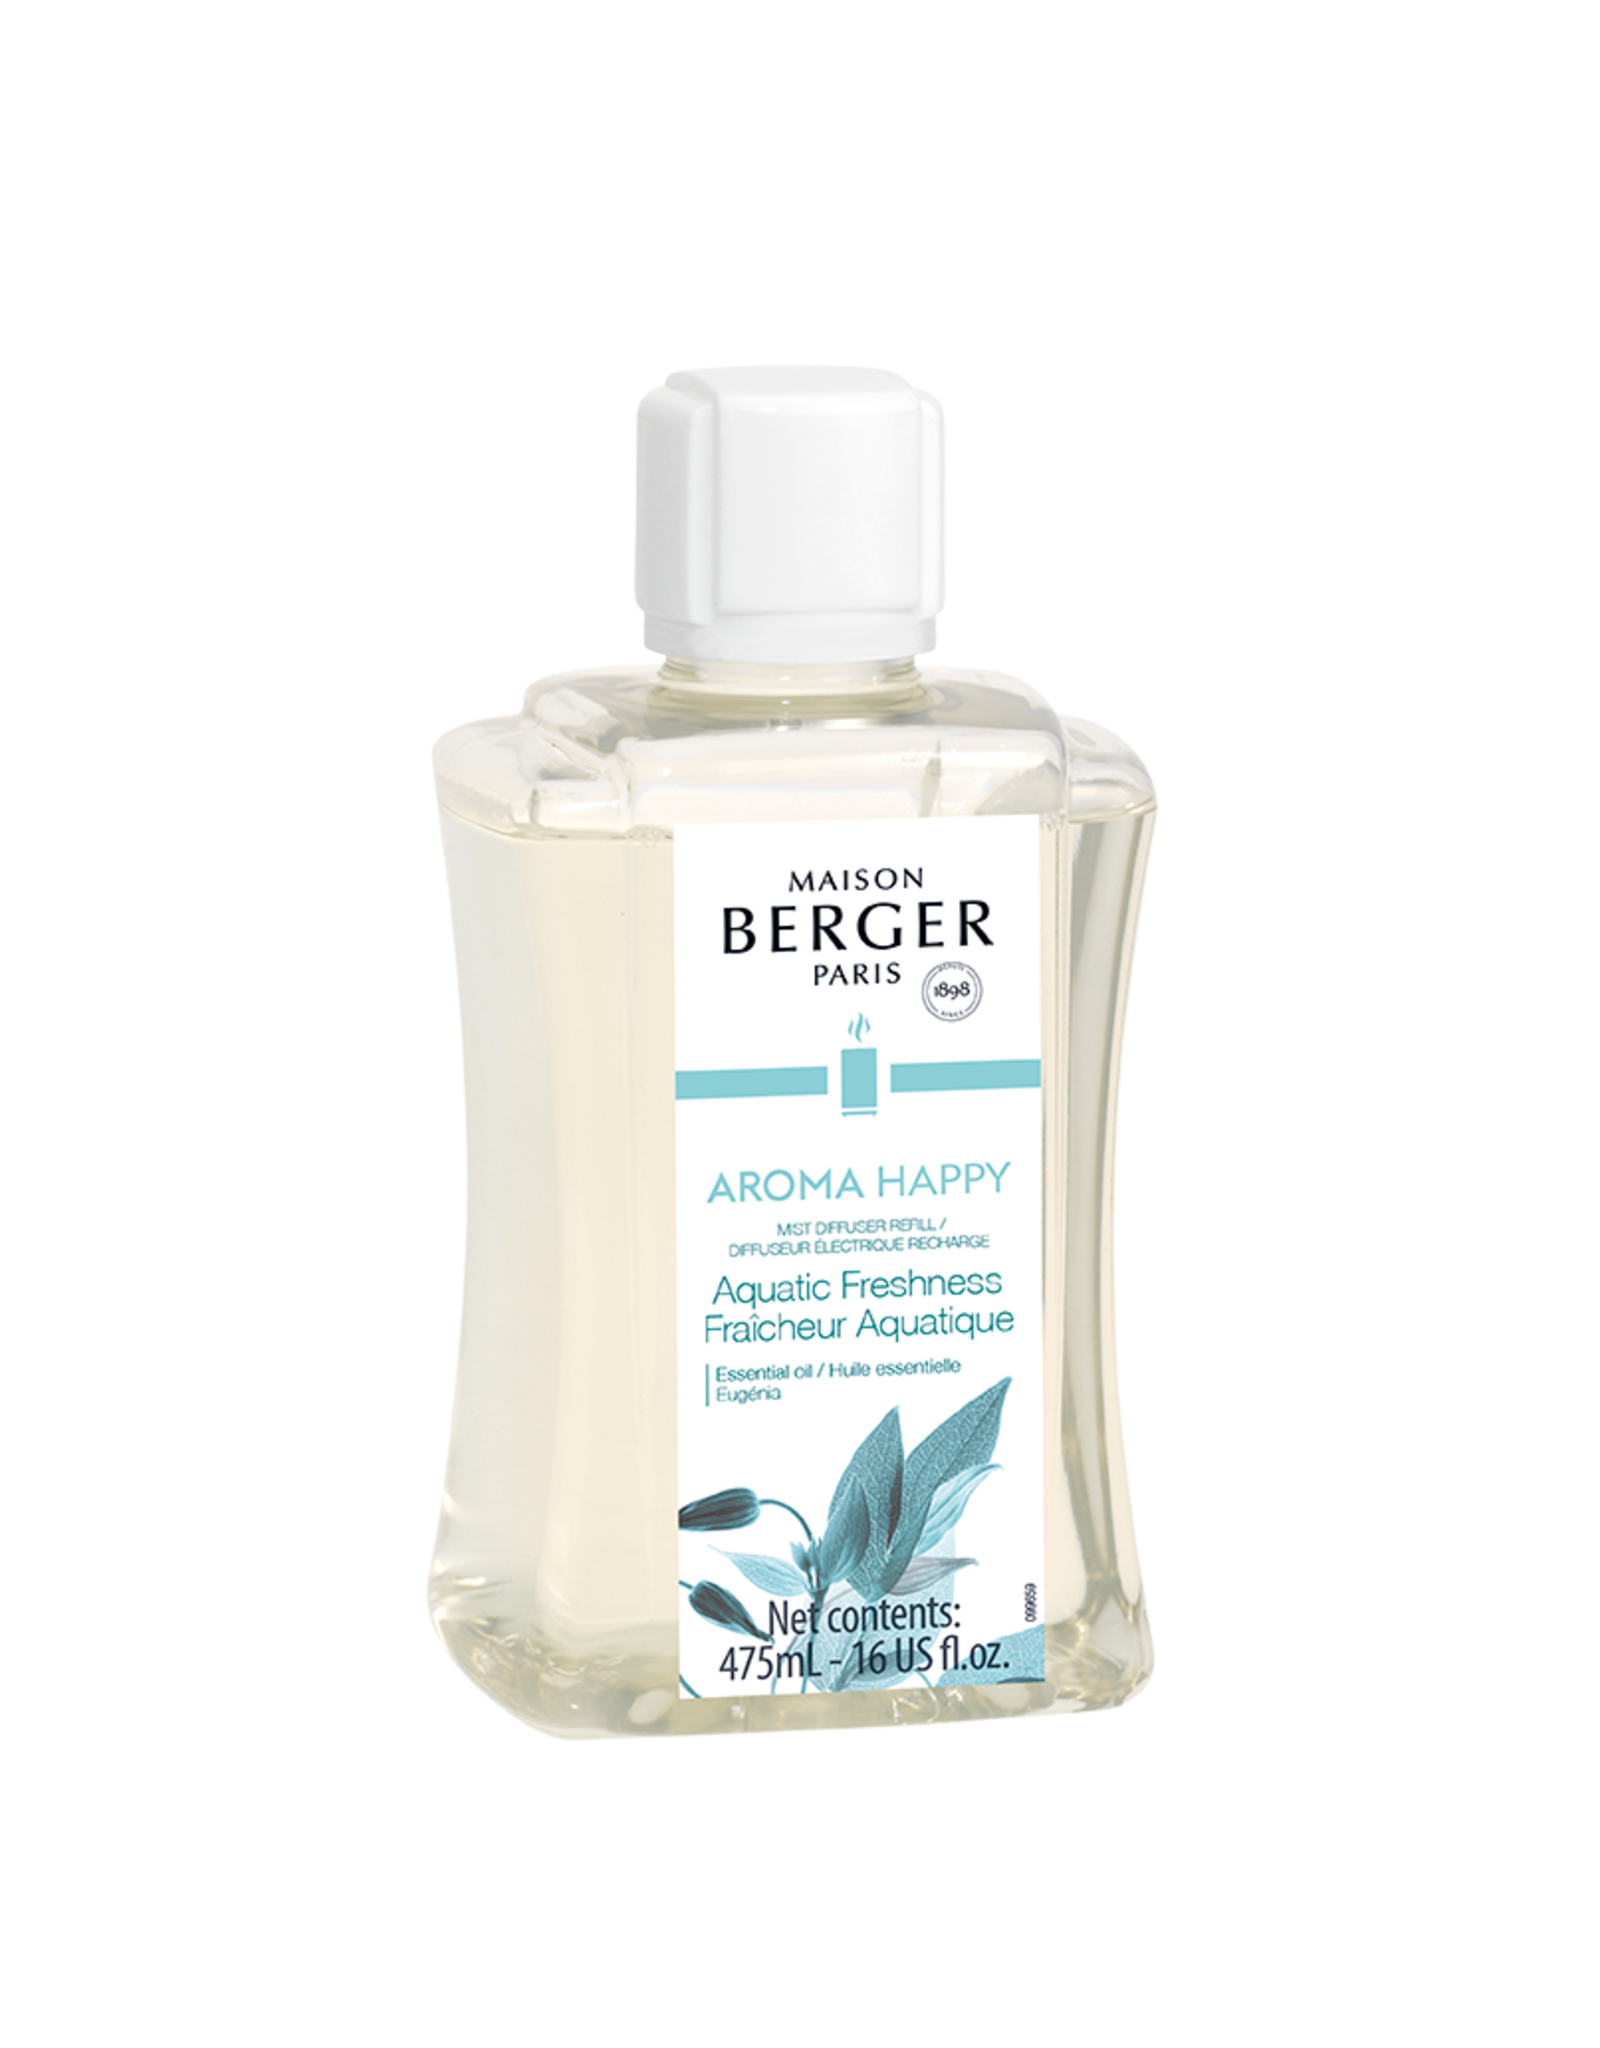 Maison Berger Mist Diffuser Fragrance 475ml Refill Aroma Happy Aquatic Freshness